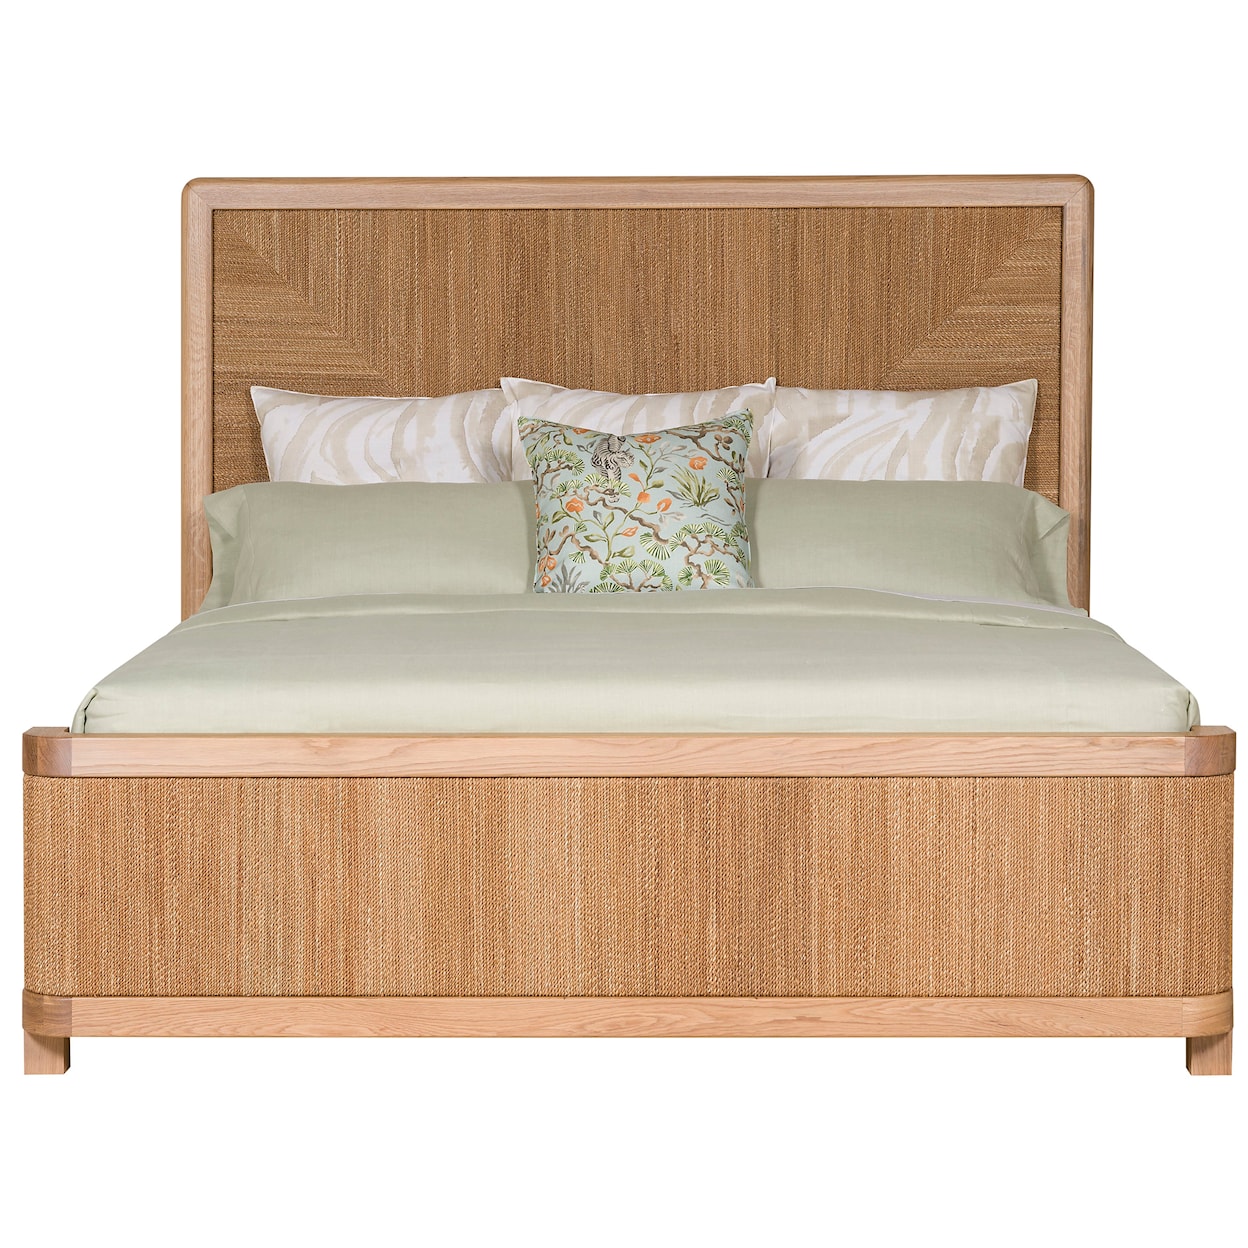 Vanguard Furniture Form California King Bed